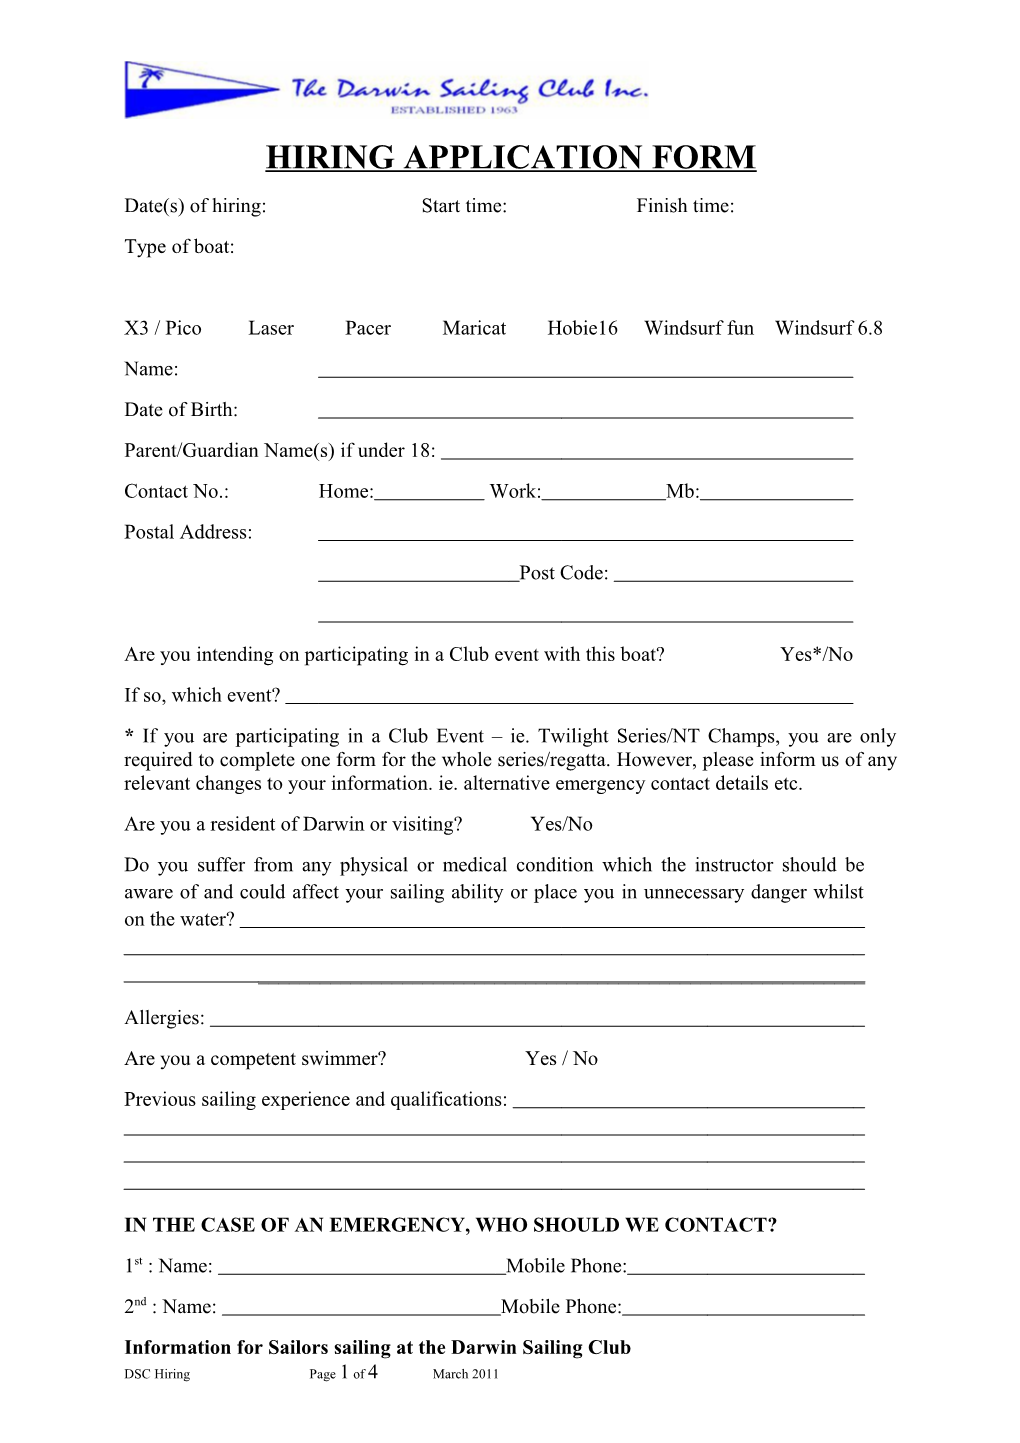 Hiring Application Form